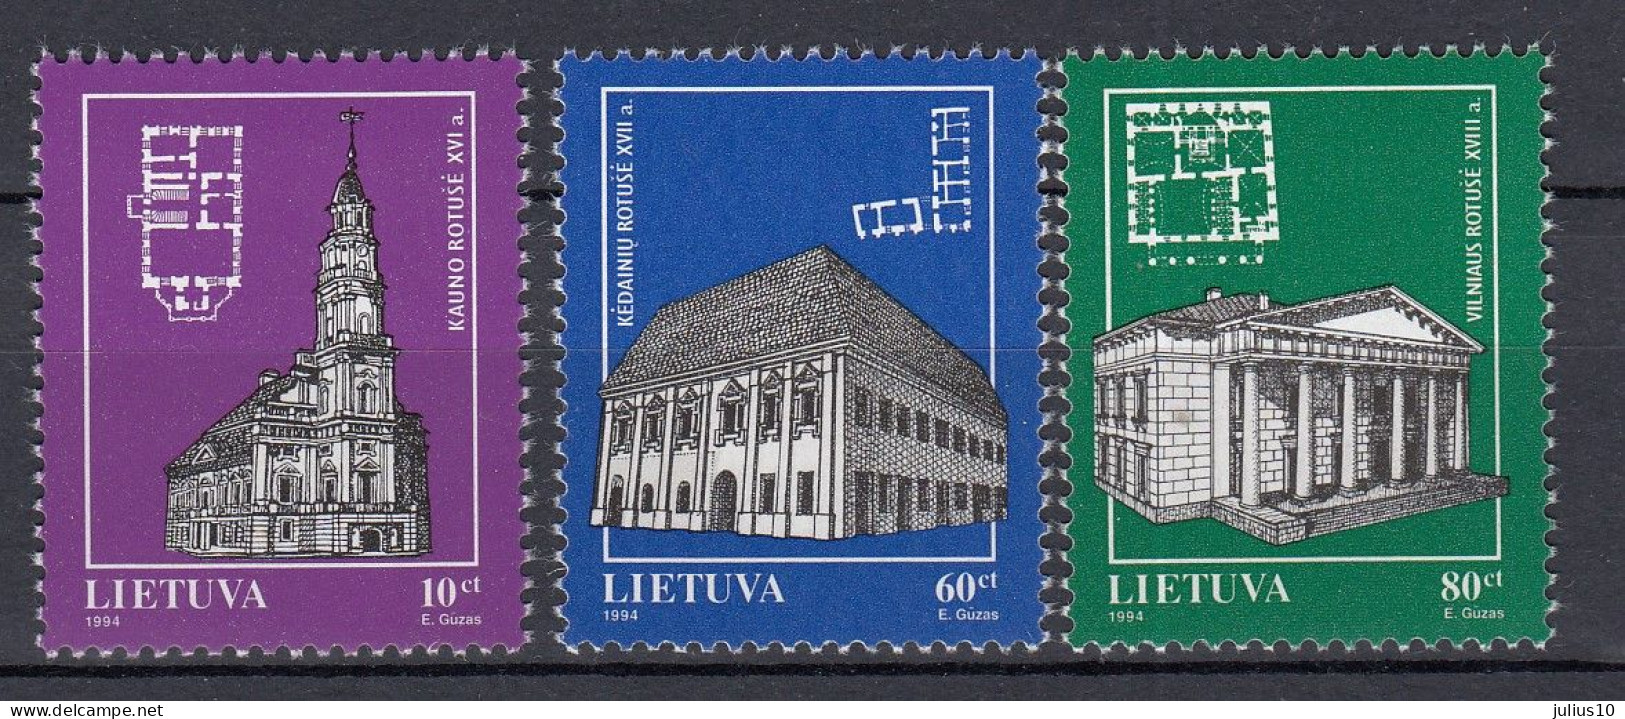 LITHUANIA 1994 Churches MNH(**) Mi 568-570 #Lt1143 - Lithuania